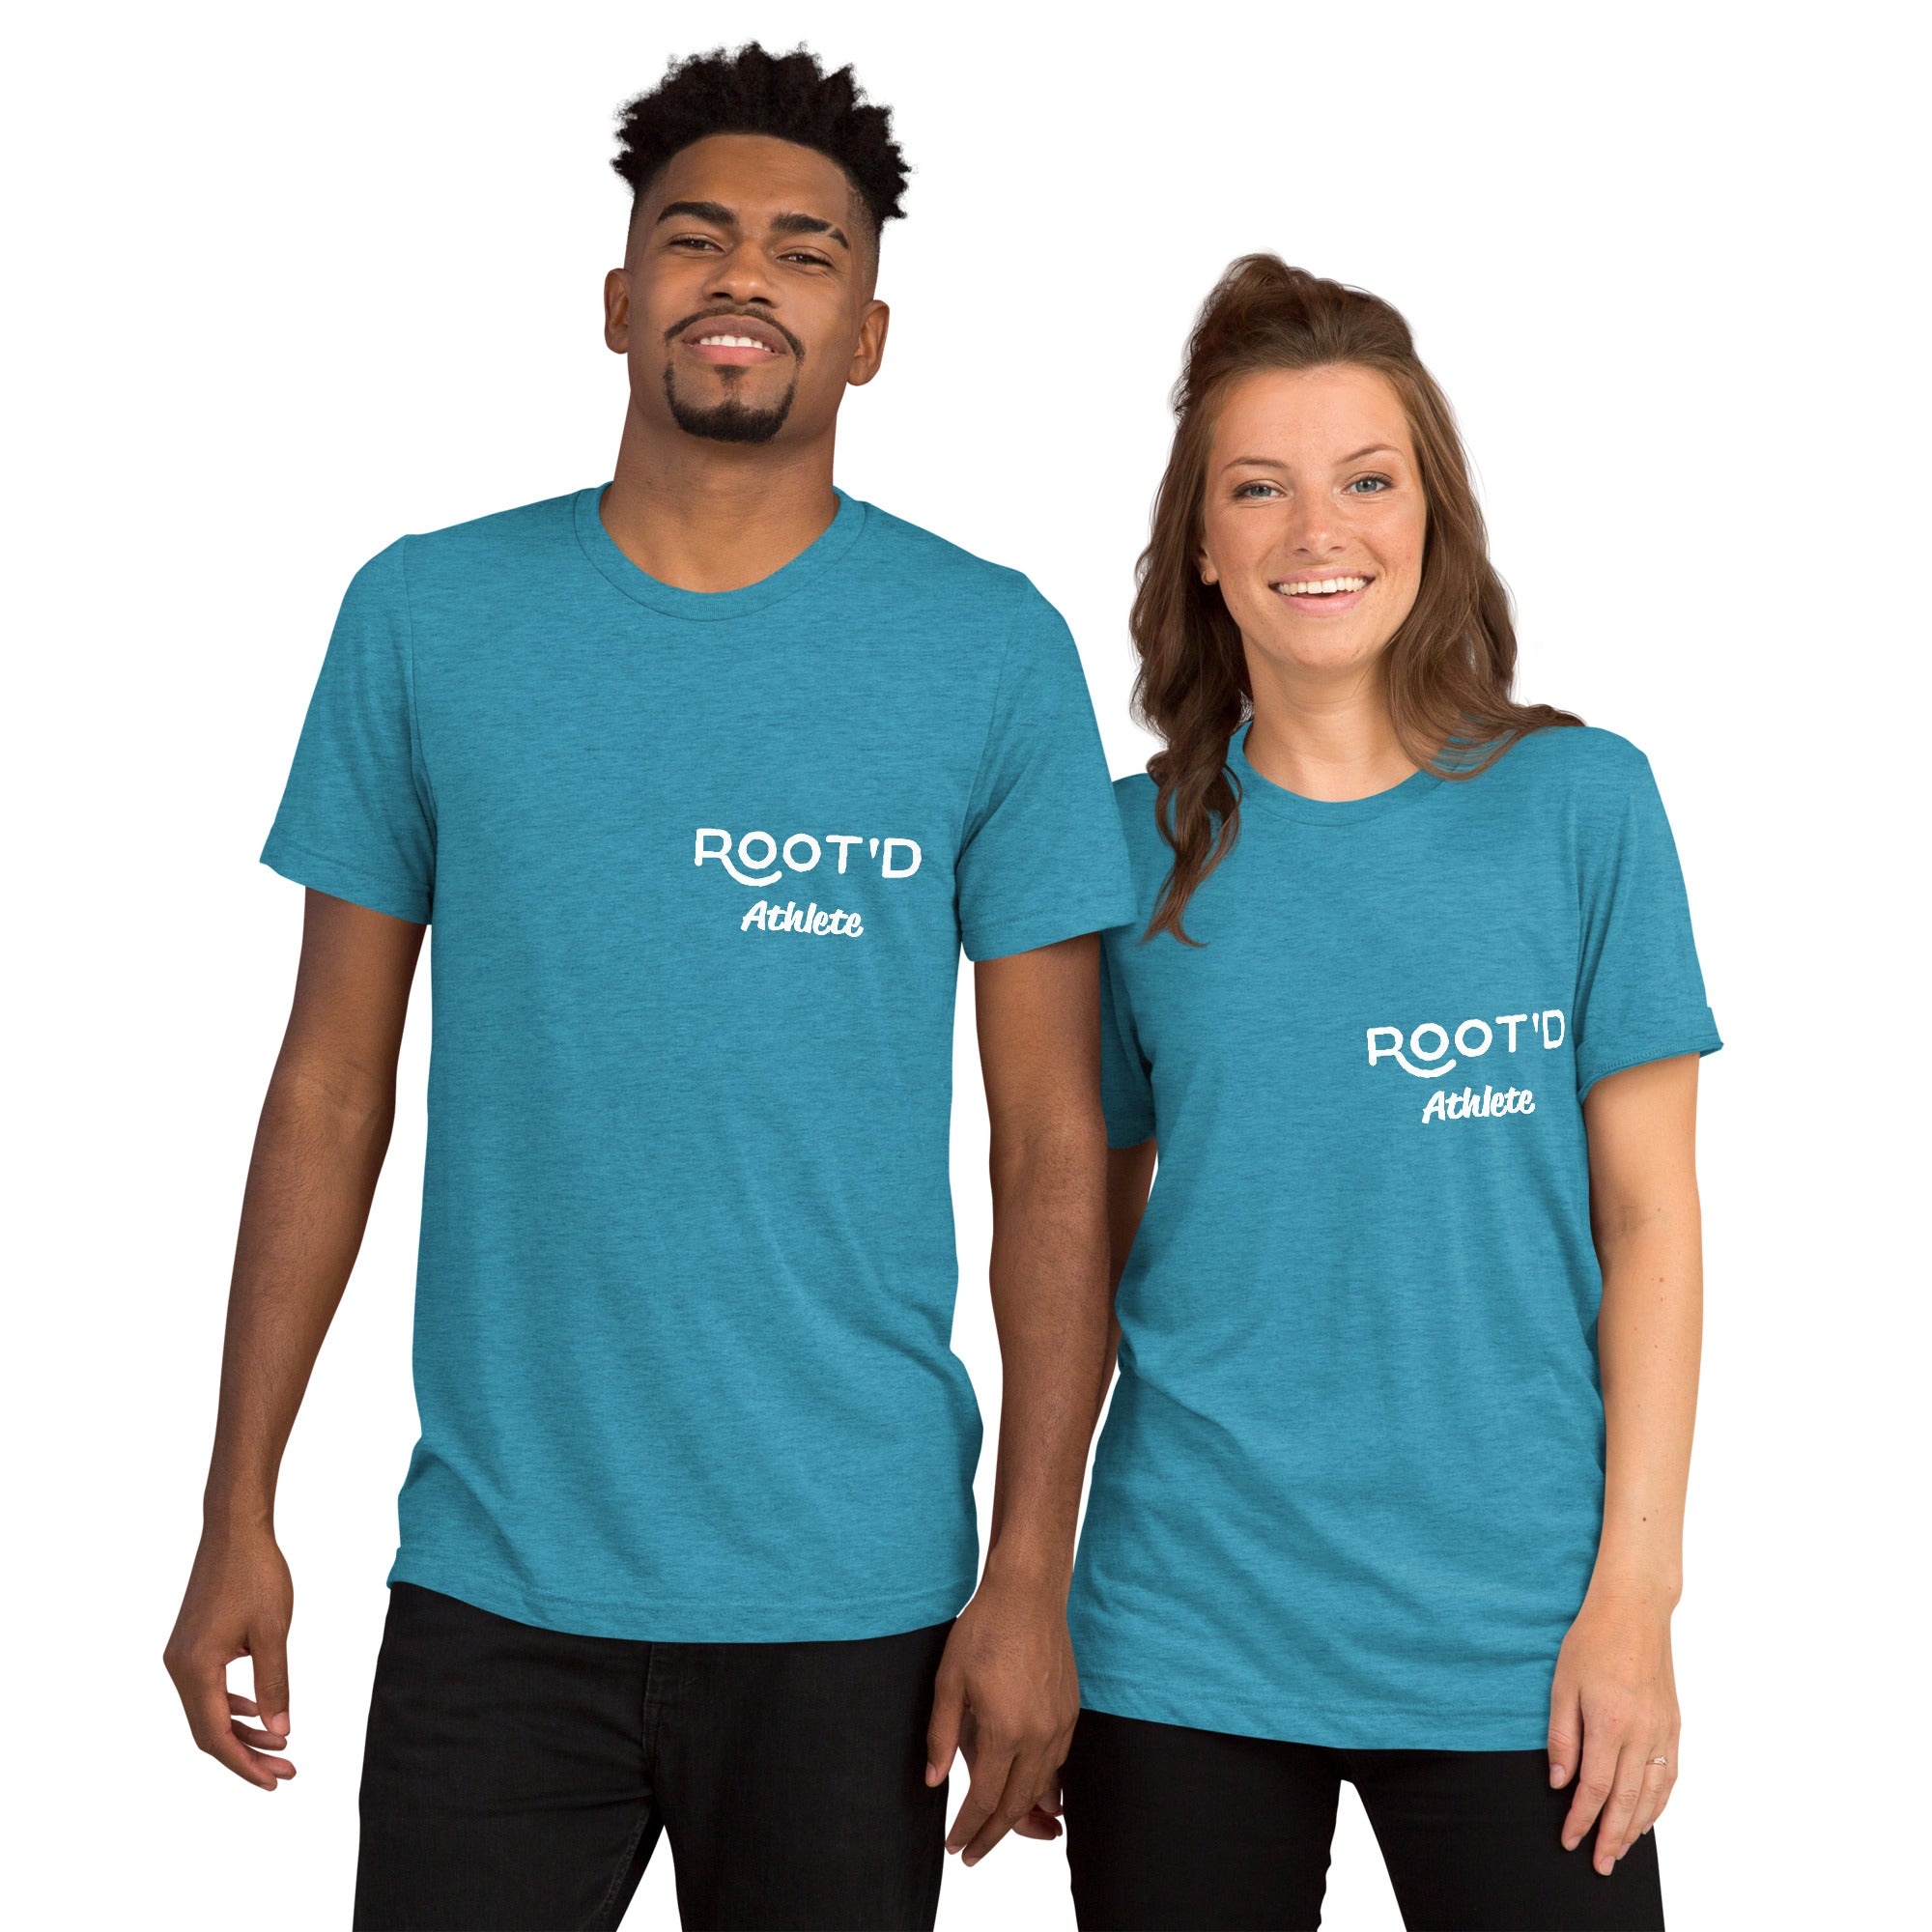 Root'd Athlete Premium Tri-blend T-Shirt - Unisex